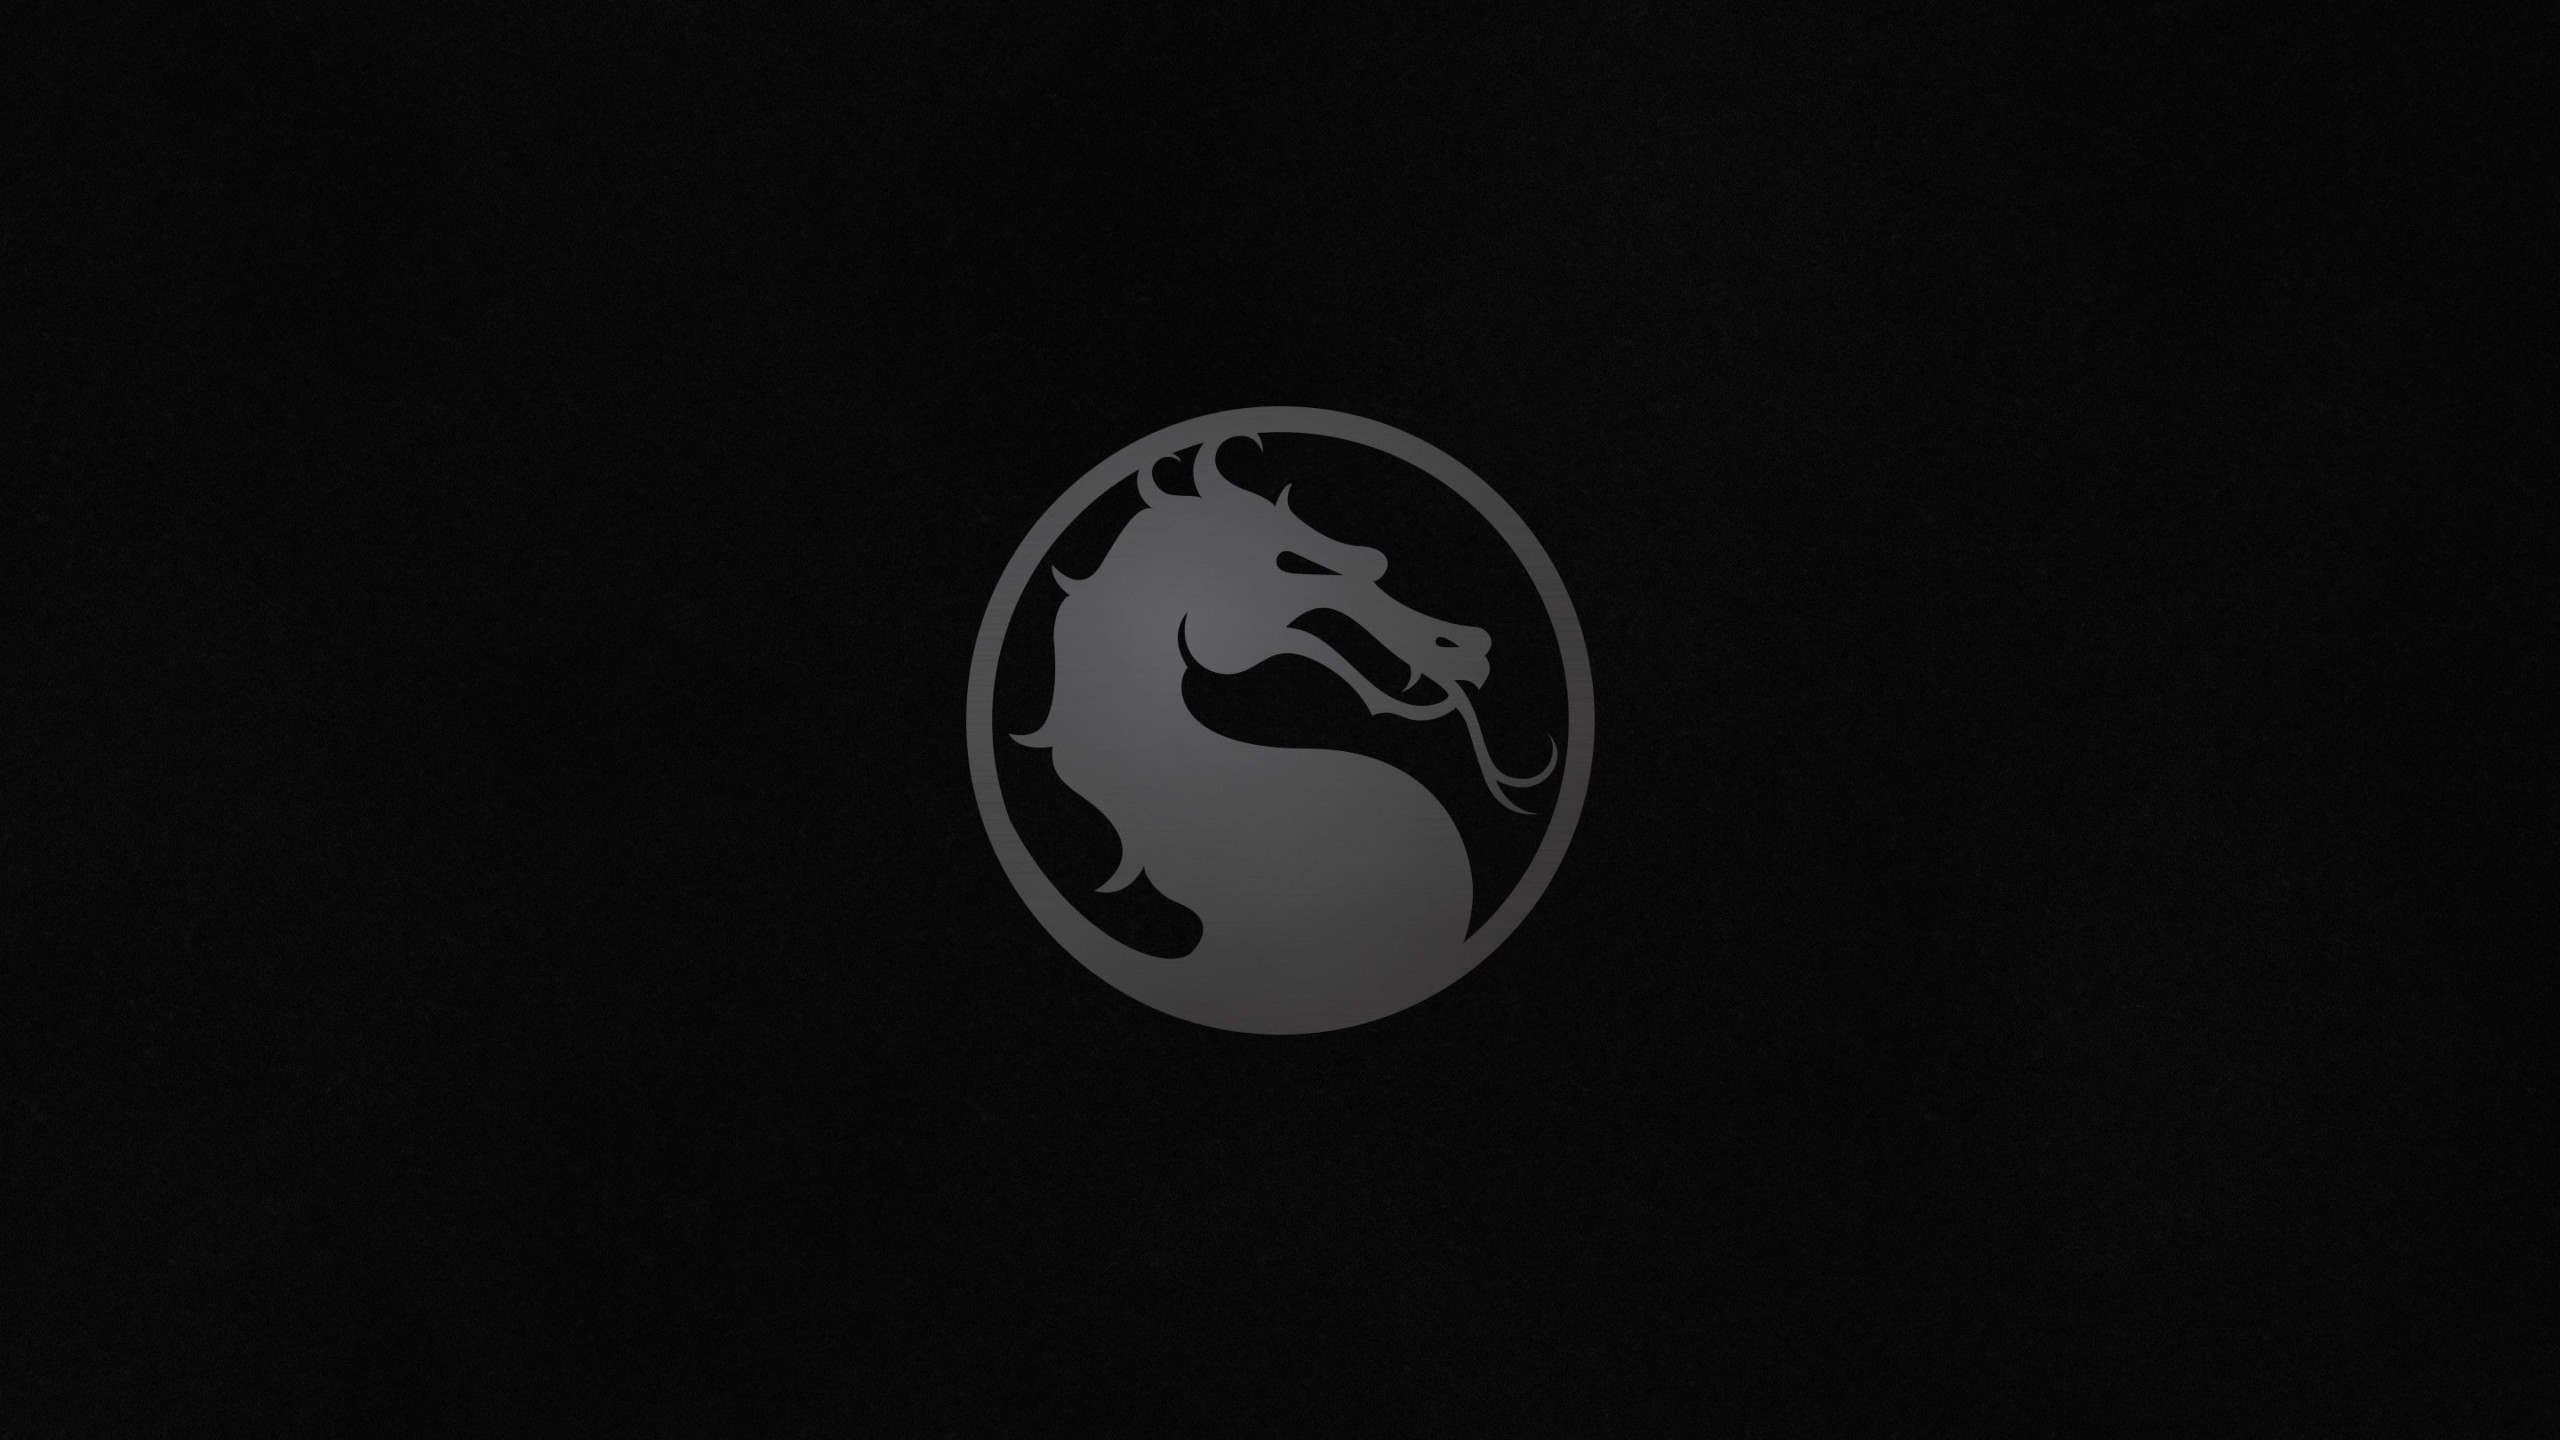 Mortal Kombat X Logo Wallpaper for Social Media YouTube Channel Art